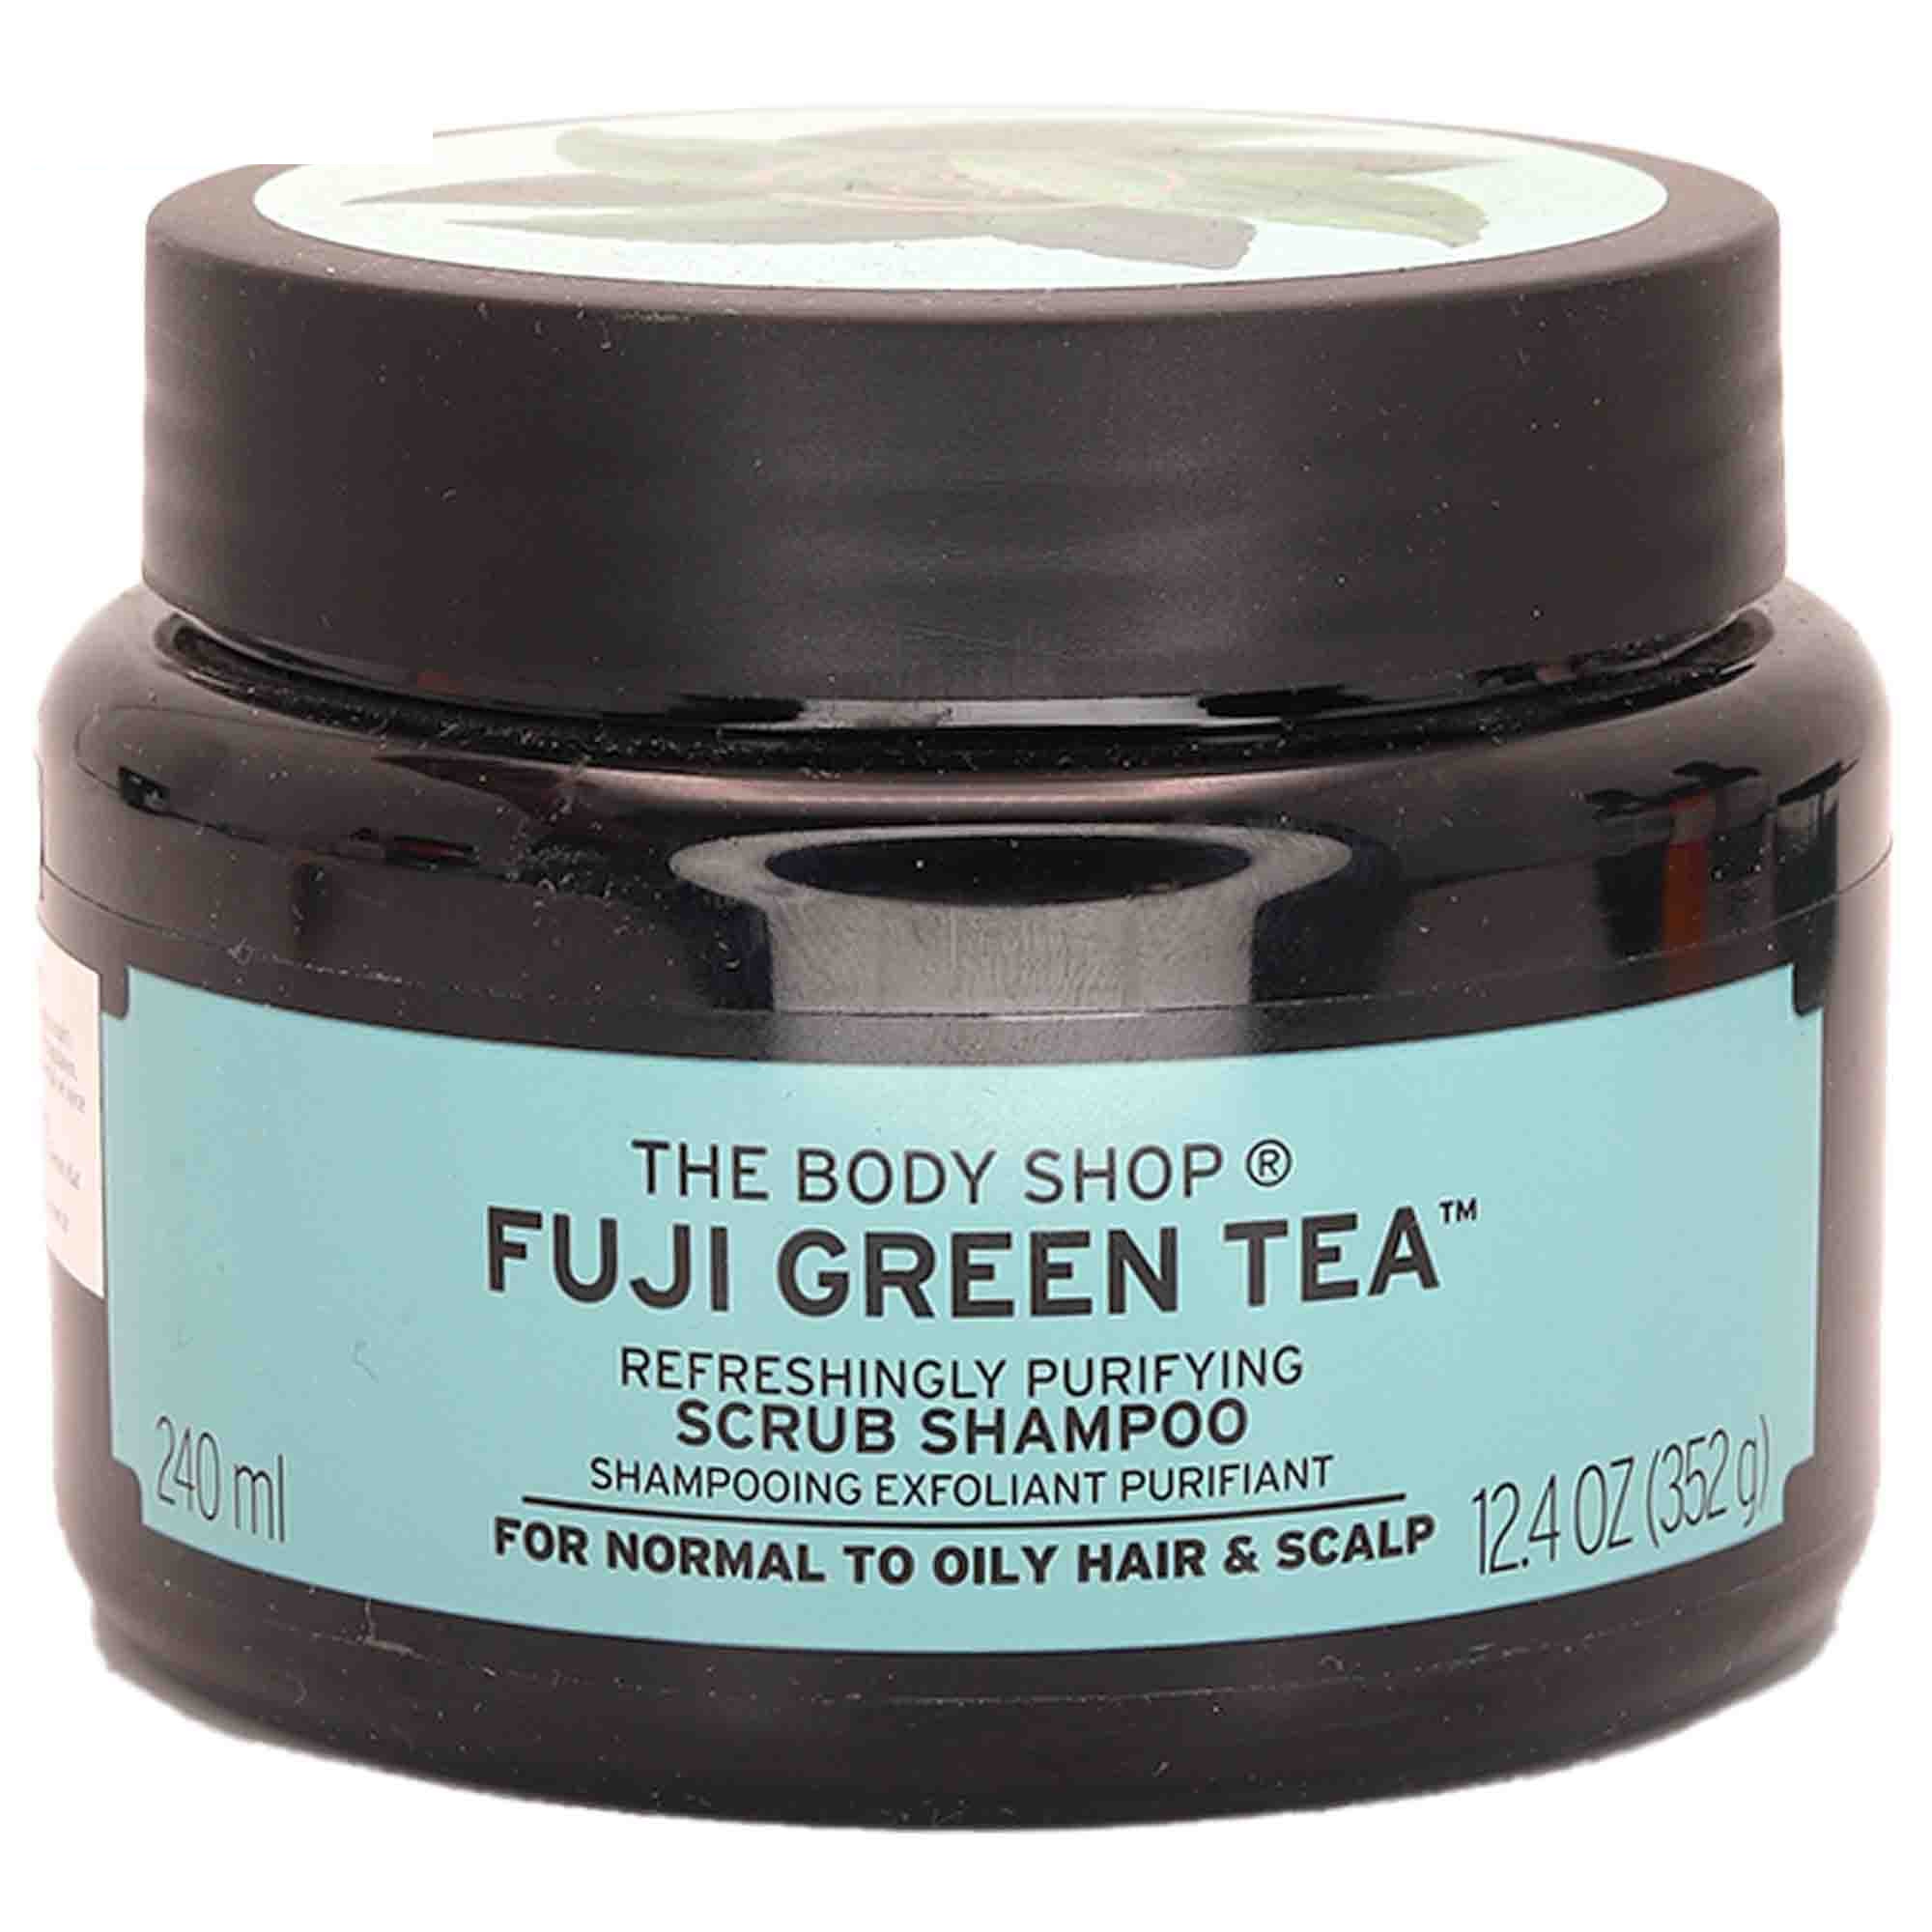 Fuji Green Tea Green Tea Extract Scrub 240 Mill Body Shop - Body Shop